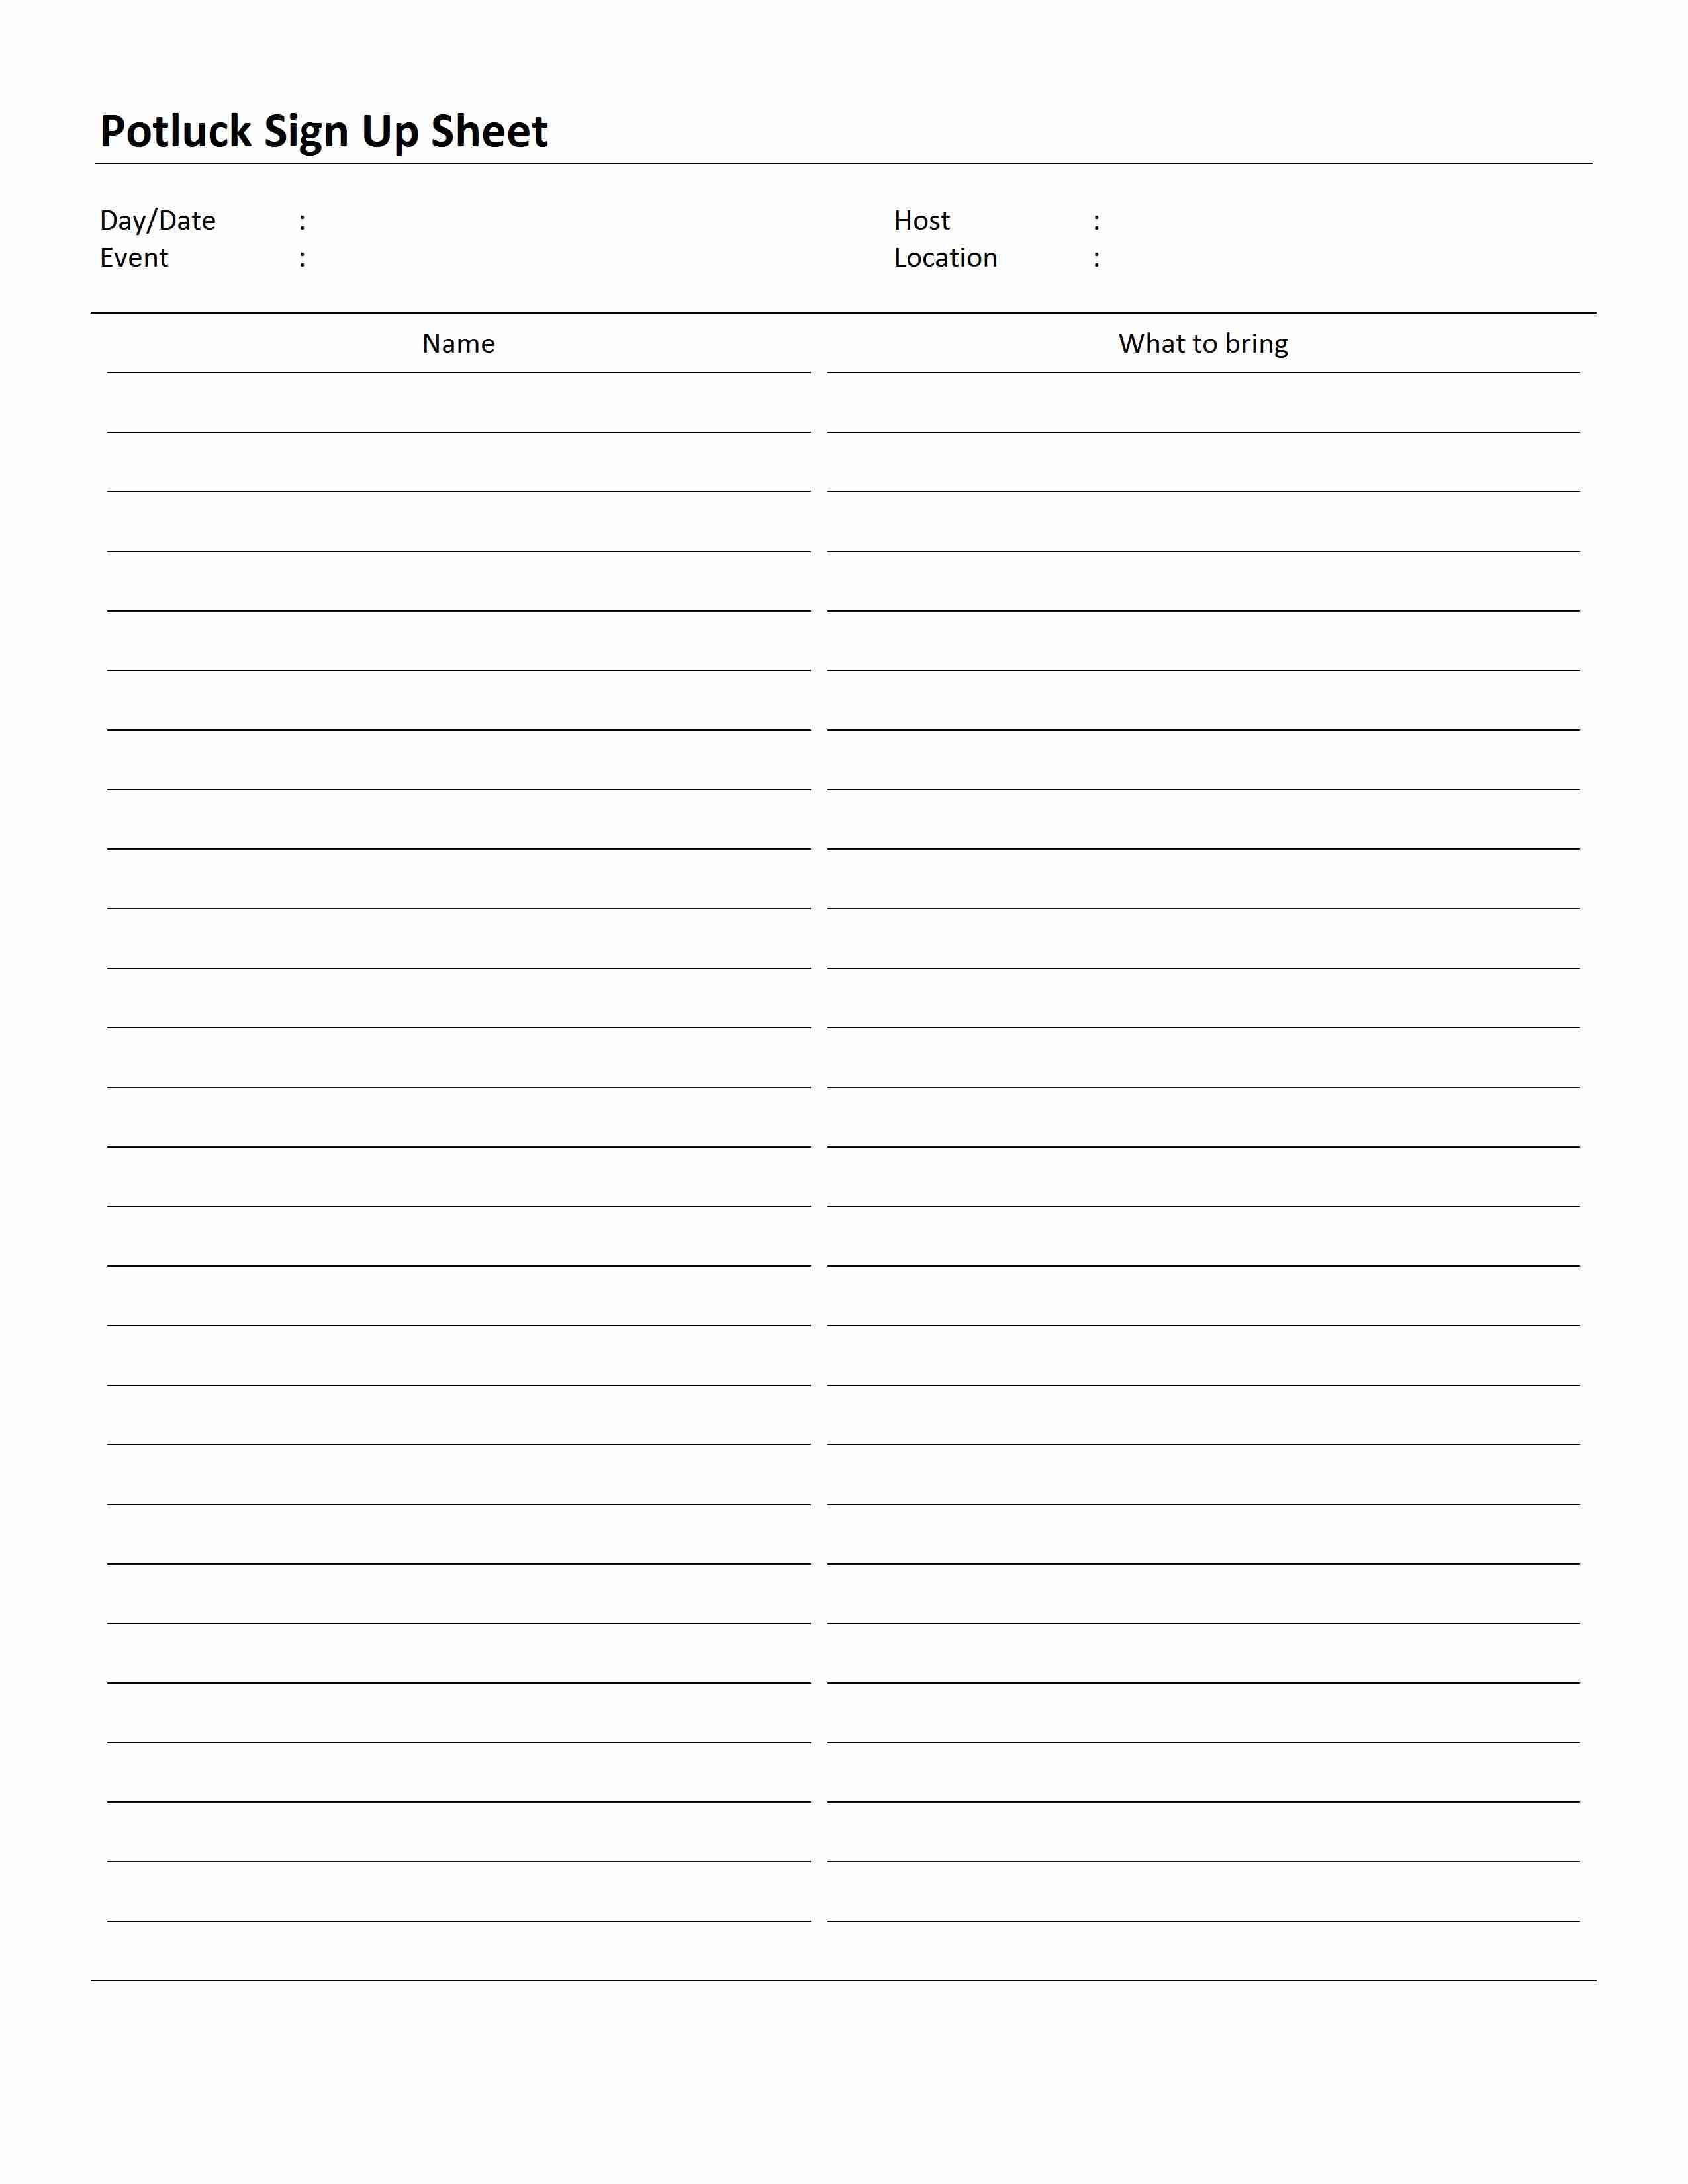 Sign Up Sheet Template Word Potluck Sign Up Sheet